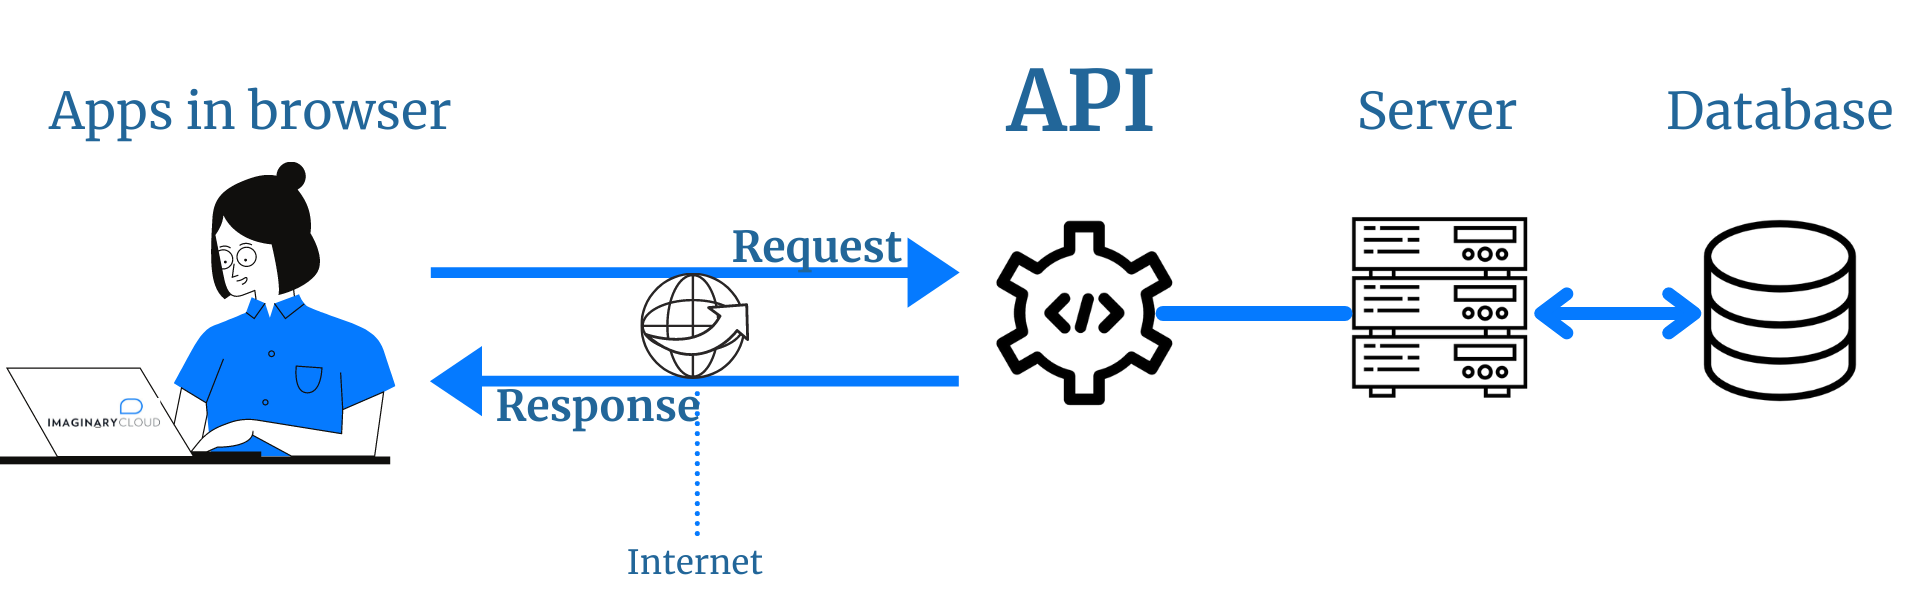 How APIs work | Imaginary Cloud